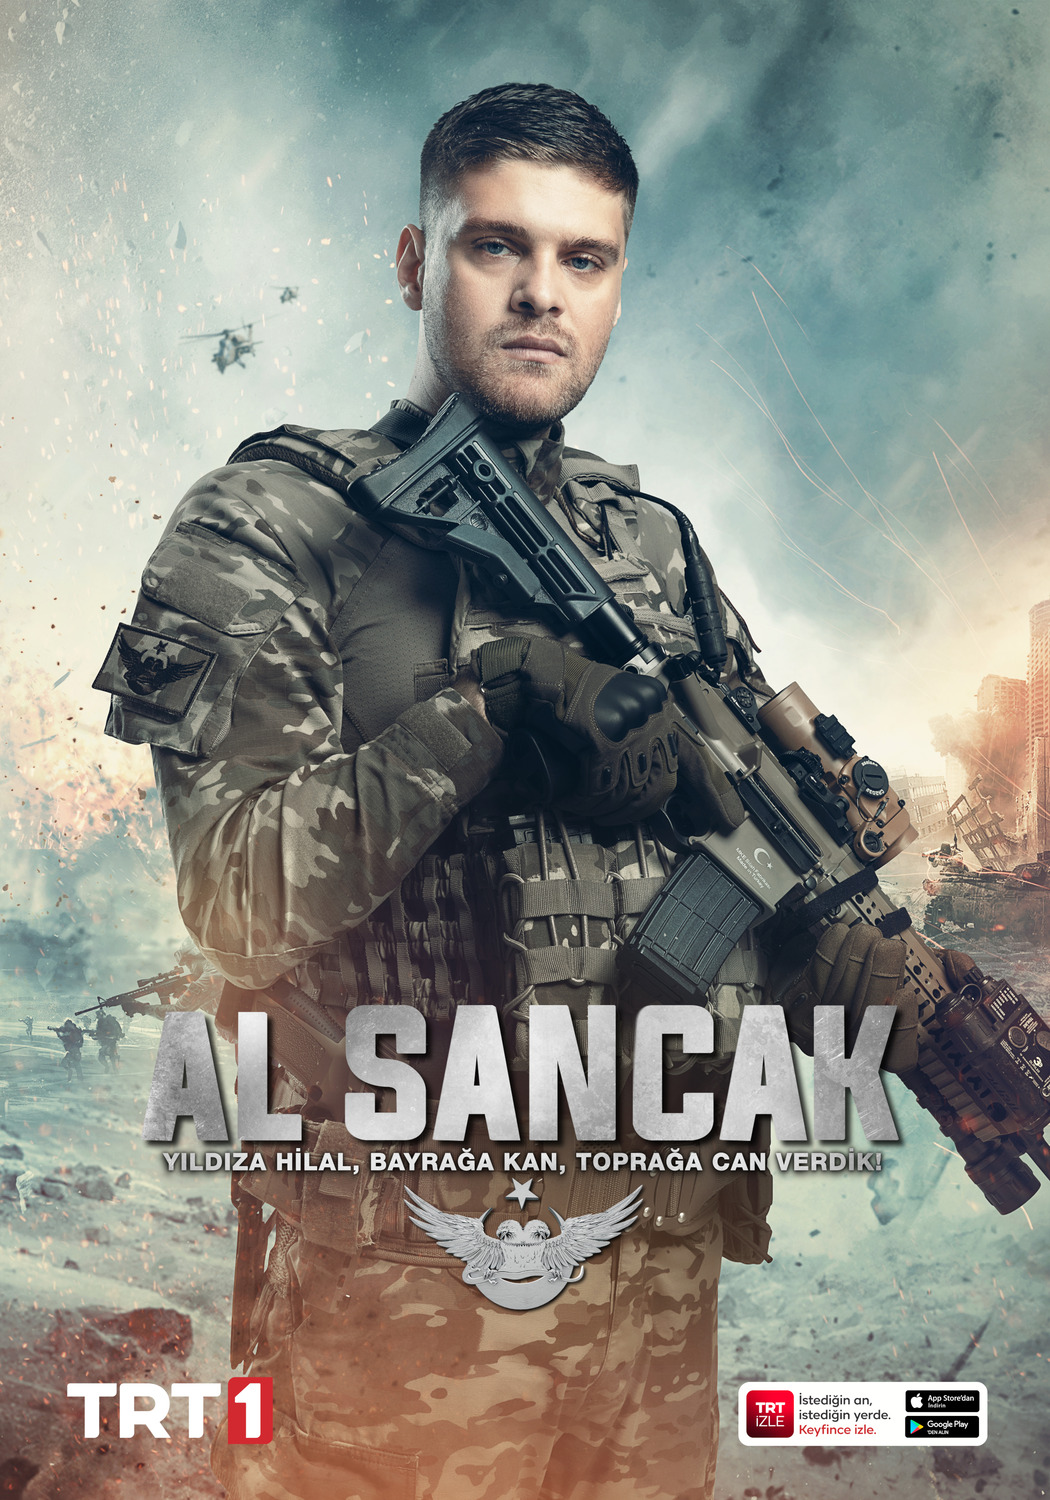 Extra Large TV Poster Image for Al Sancak (#14 of 20)